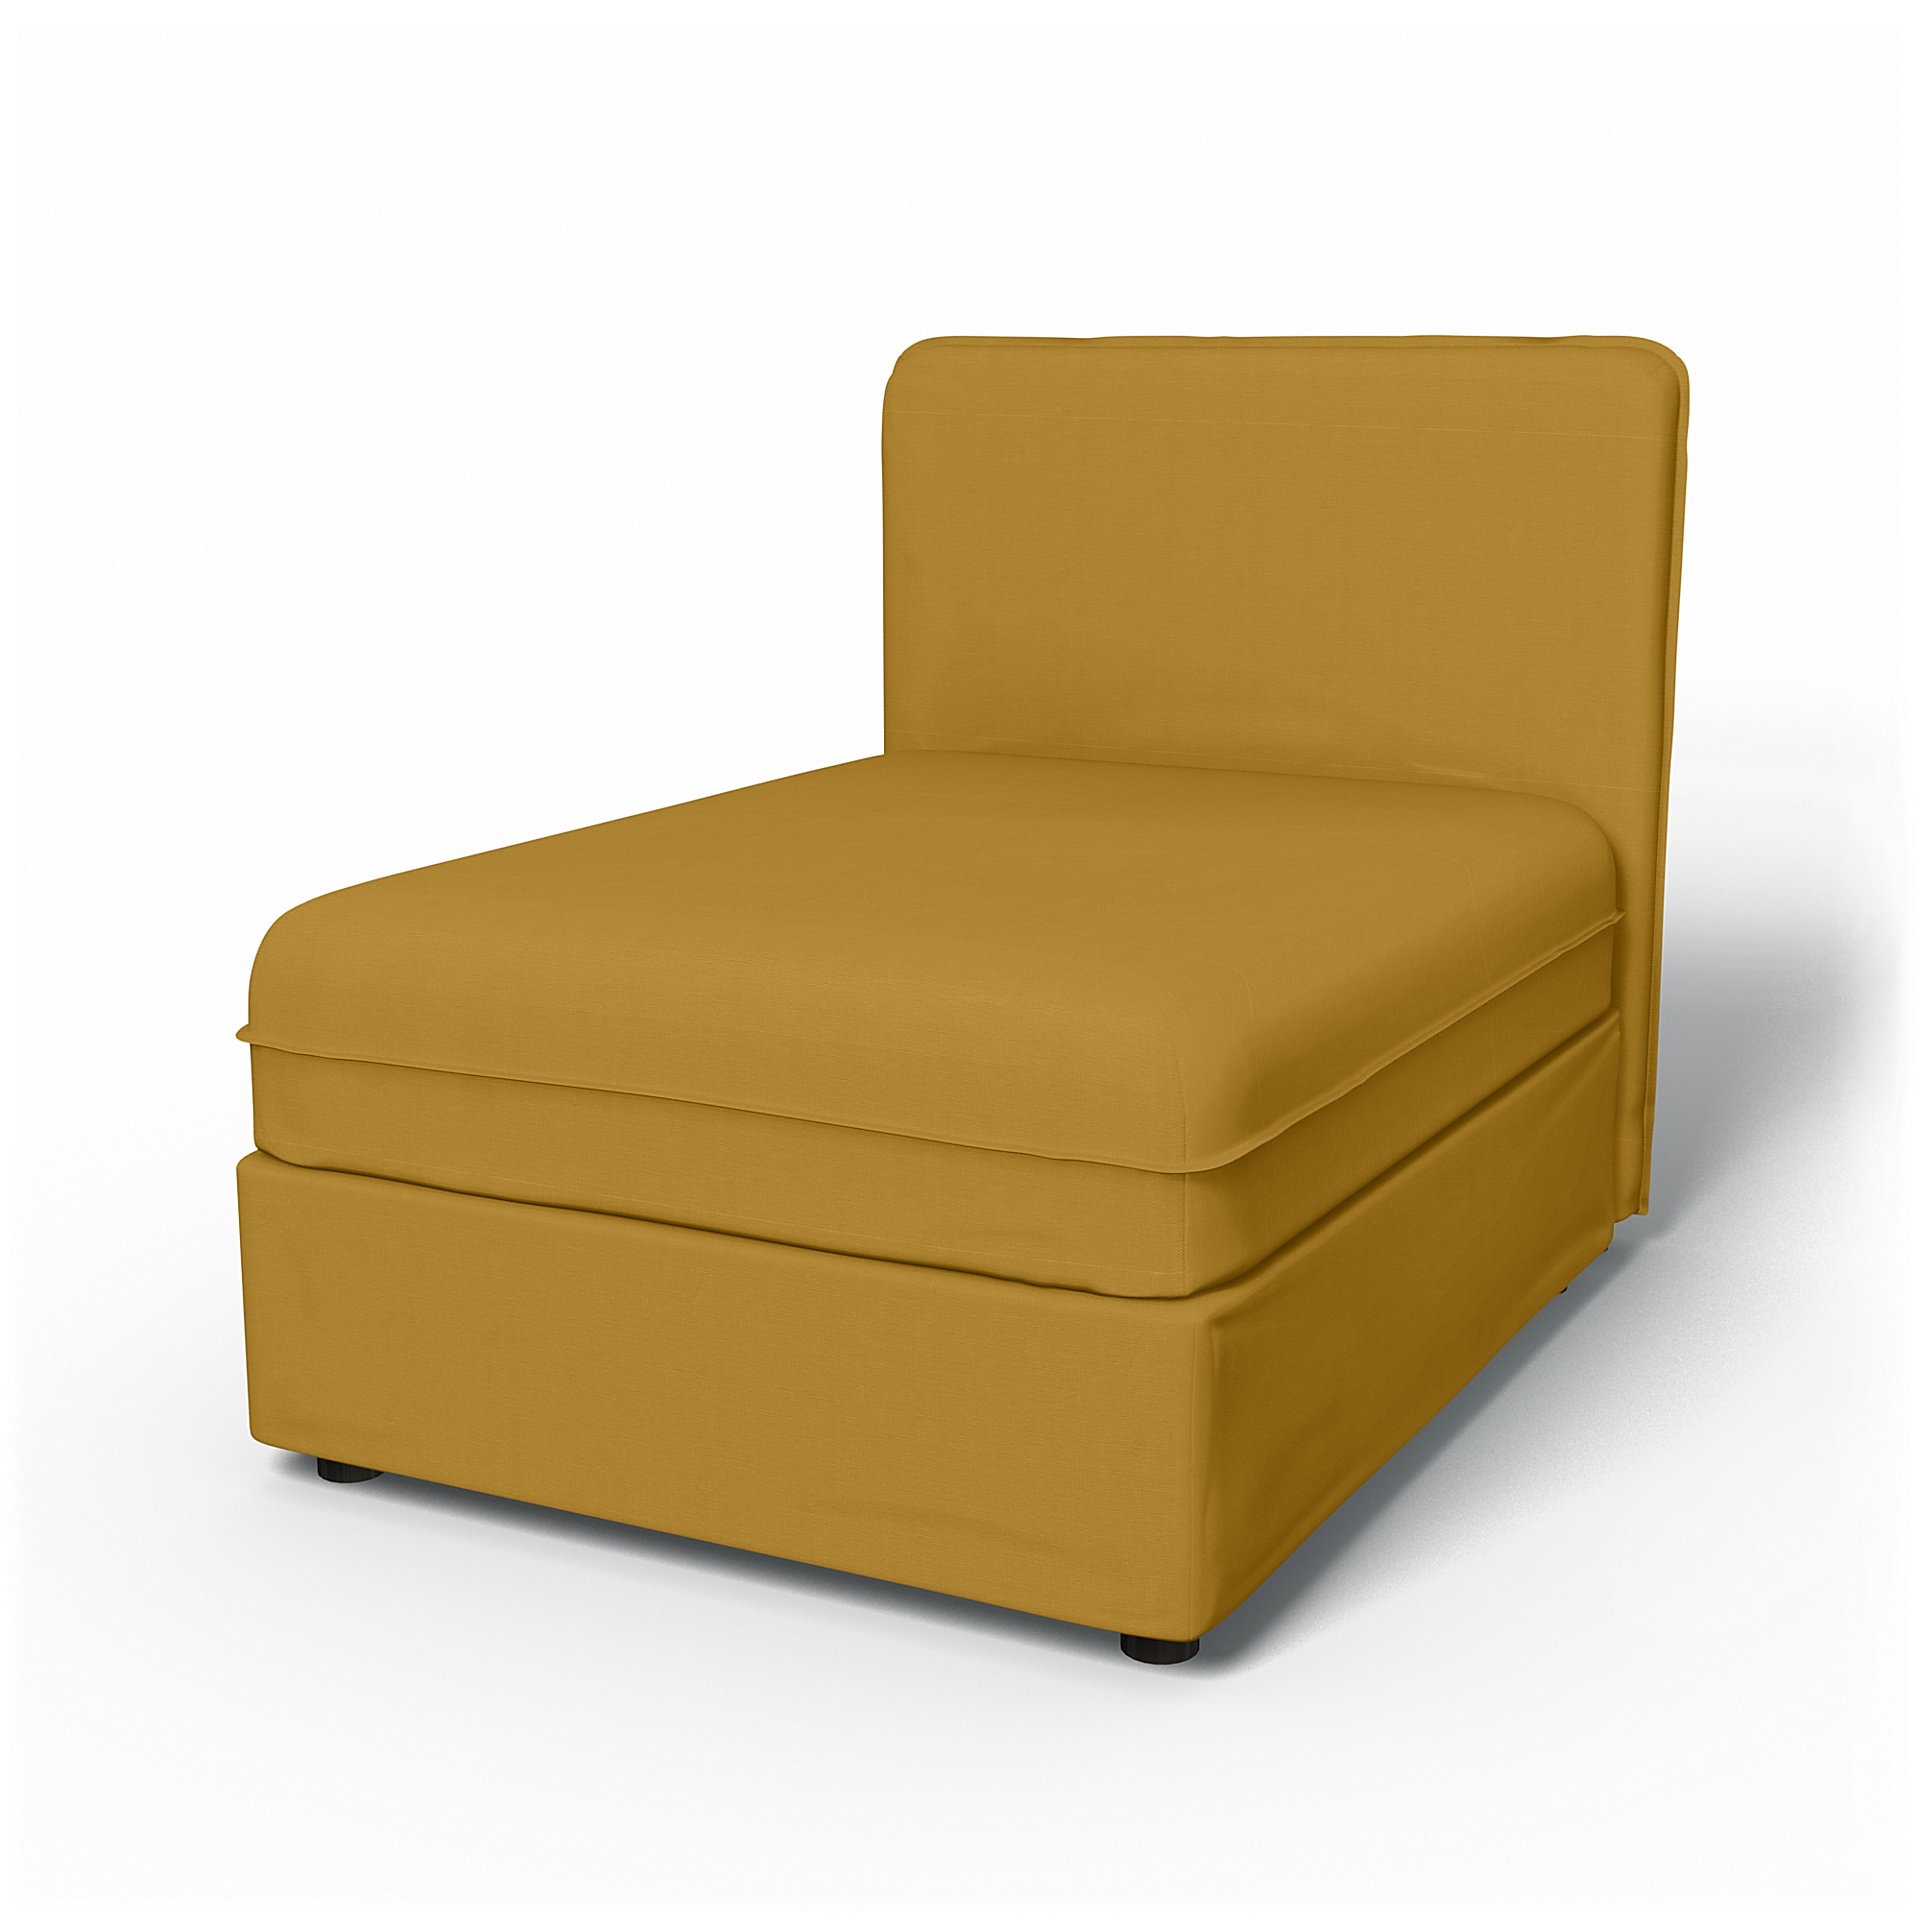 IKEA - Vallentuna Seat Module with Low Back Cover 80x100cm 32x39in, Honey Mustard, Cotton - Bemz